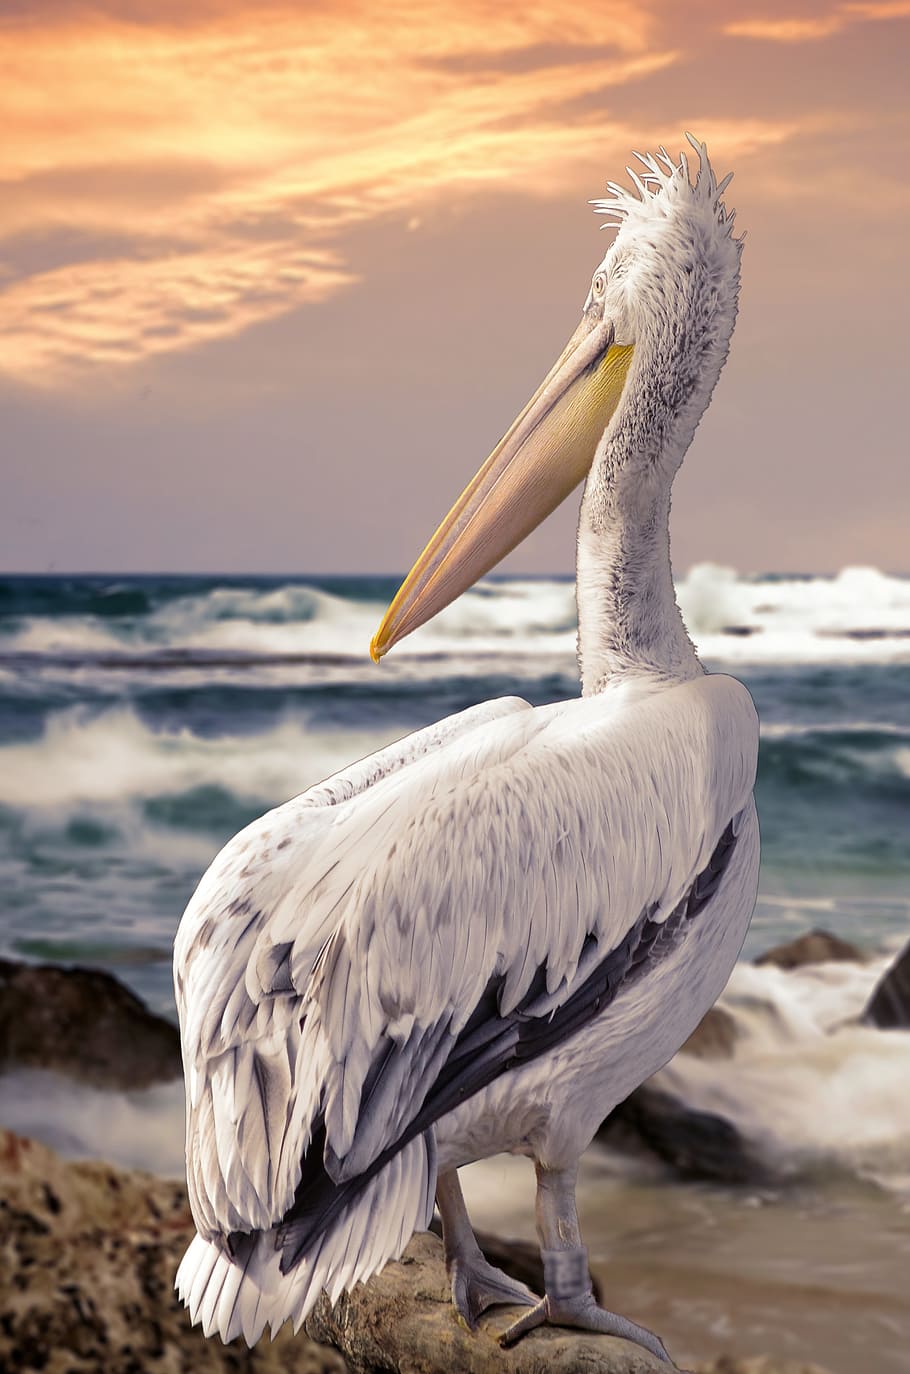 white, bird, standing, rock, feather, nature, animal world, waters, dalmatian pelican, sunset